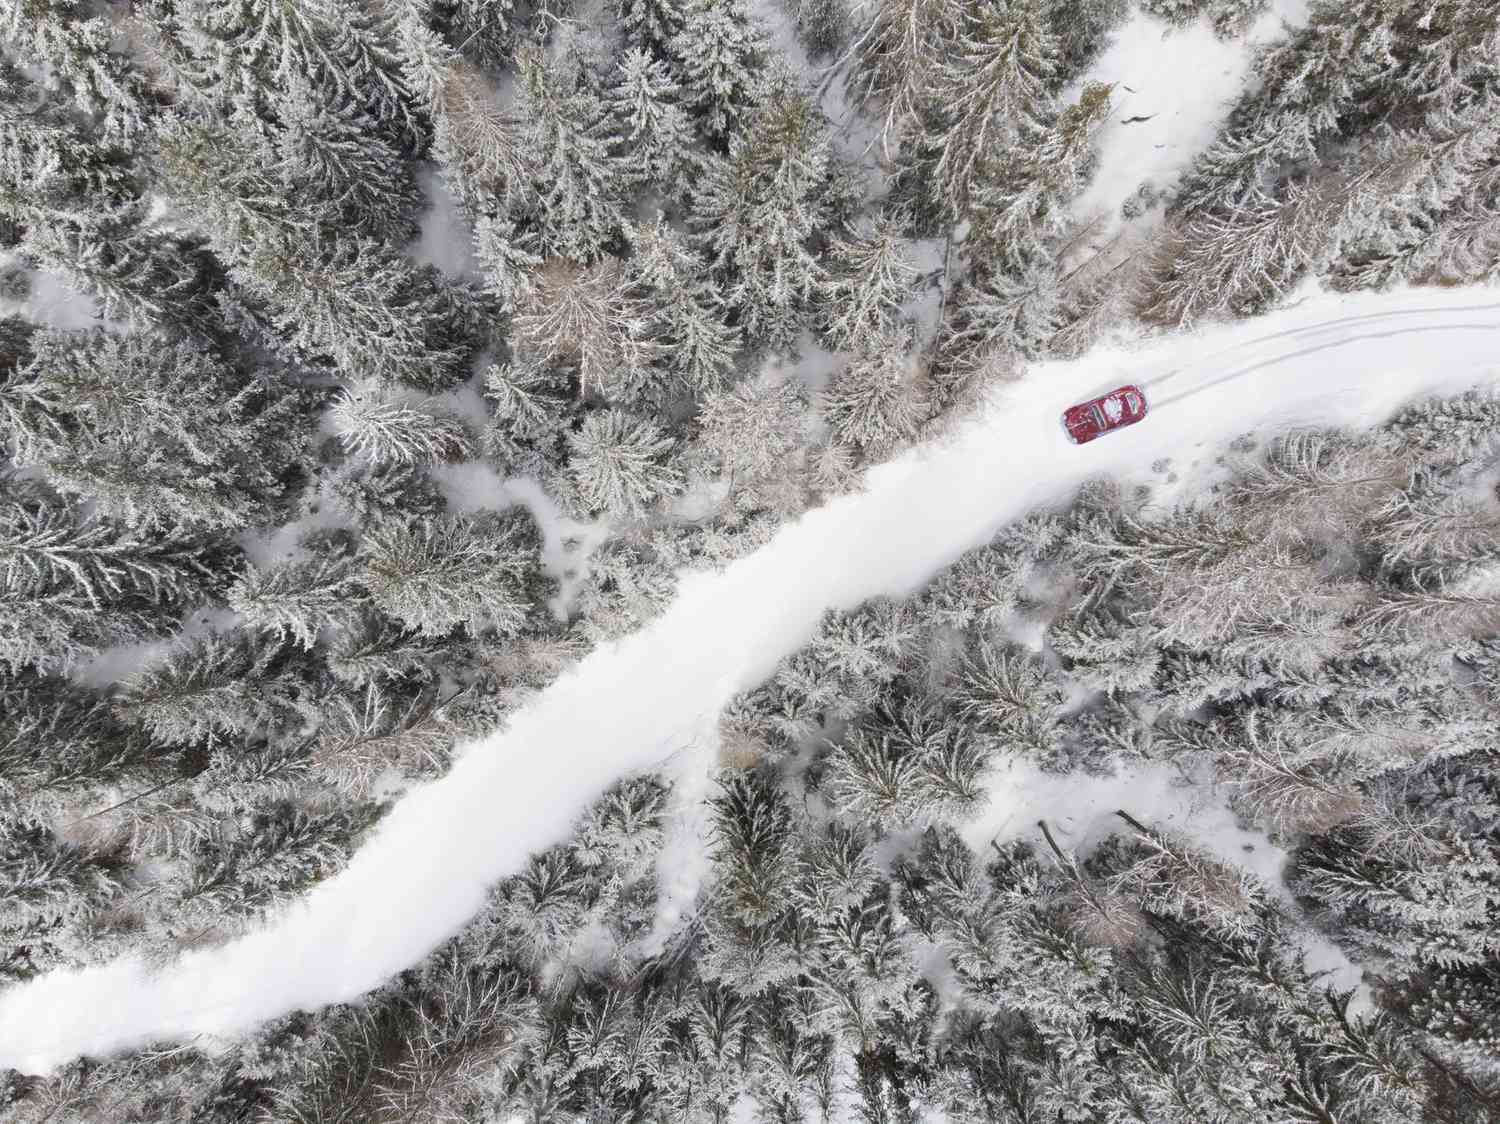 car on snowy road through forest